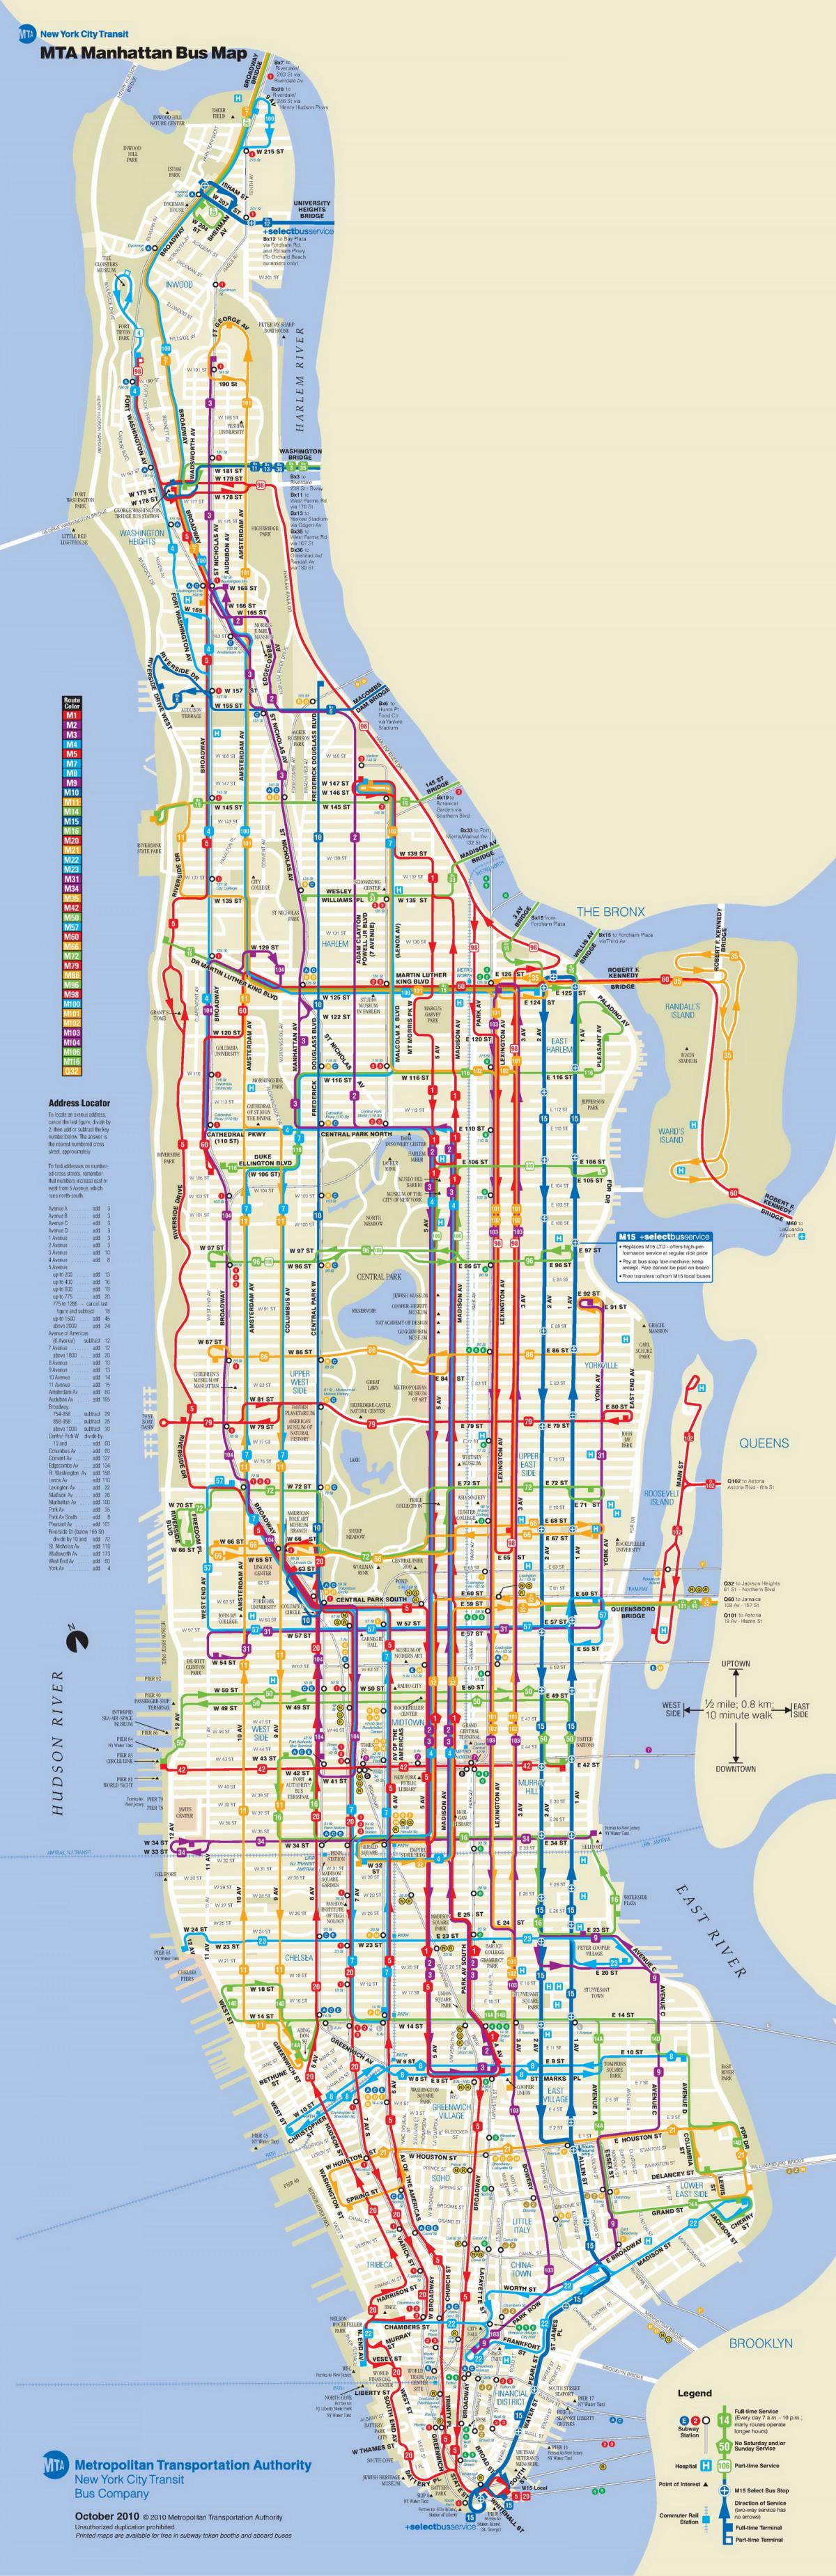 MTA bus mappa di manhattan